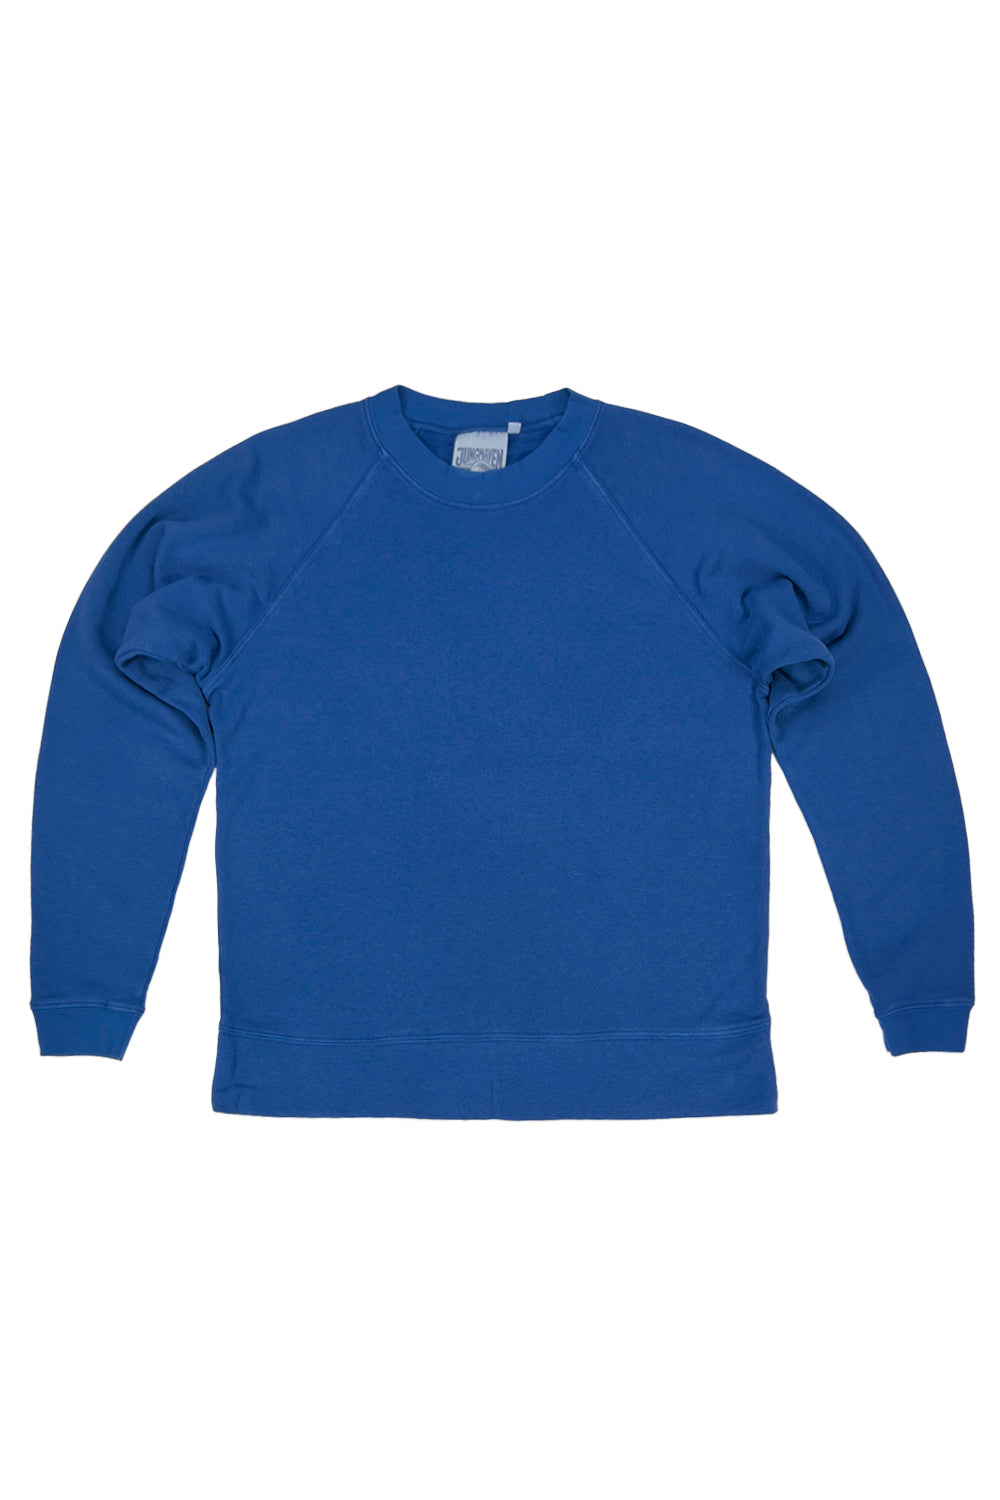 Sierra Raglan Sweatshirt | Jungmaven Hemp Clothing & Accessories / Color: Galaxy Blue